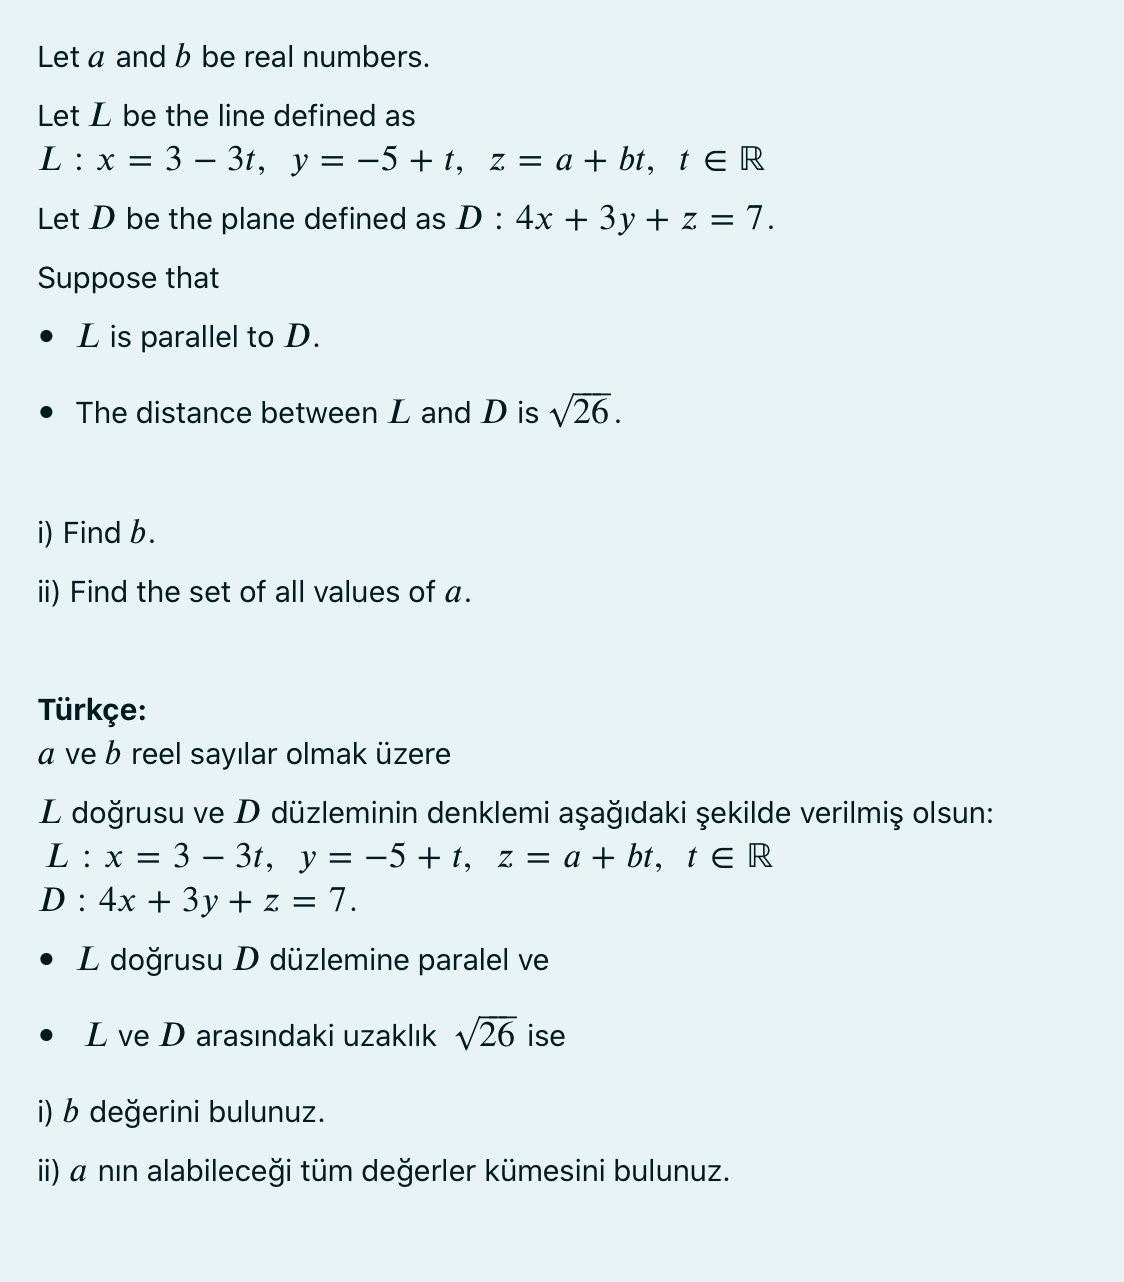 Let a and b be real numbers.
Let L be the line defined as
L : x =
3 – 3t, y = -5 + t, z = a + bt, t E R
Let D be the plane defined as D : 4x + 3y + z = 7.
Suppose that
• L is parallel to D.
• The distance between L and D is y26.
i) Find b.
ii) Find the set of all values of a.
Türkçe:
a ve b reel sayılar olmak üzere
L doğrusu ve D düzleminin denklemi aşağıdaki şekilde verilmiş olsun:
L : x = 3 – 3t, y = -5 + t, z = a + bt, t E R
D : 4x + 3y + z = 7.
• L doğrusu D düzlemine paralel ve
L ve D arasındaki uzaklık V26 ise
i) b değerini bulunuz.
ii) a nın alabileceği tüm değerler kümesini bulunuz.
